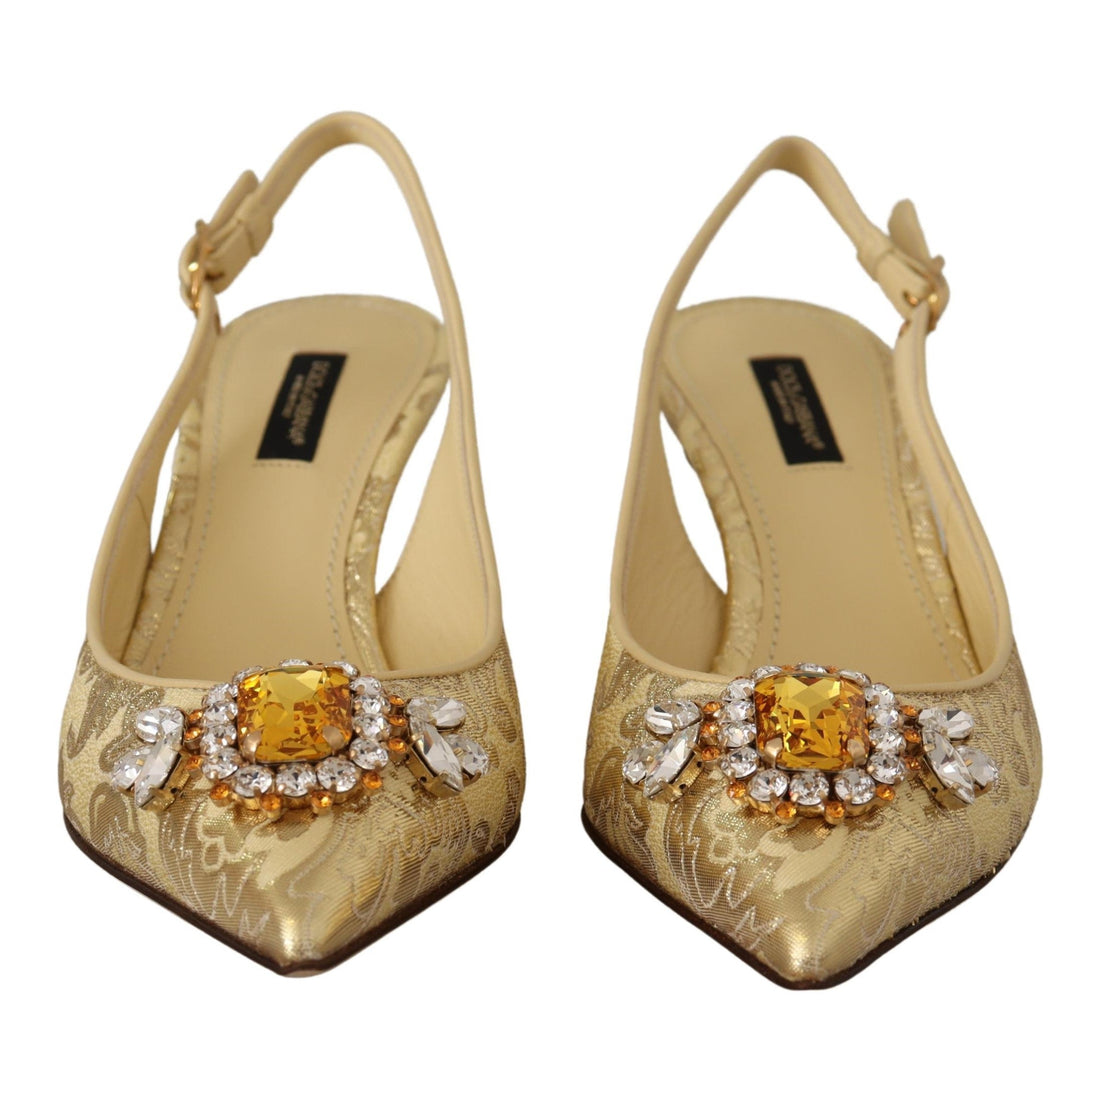 Dolce & Gabbana Gold Crystal Slingbacks Pumps Heels Shoes